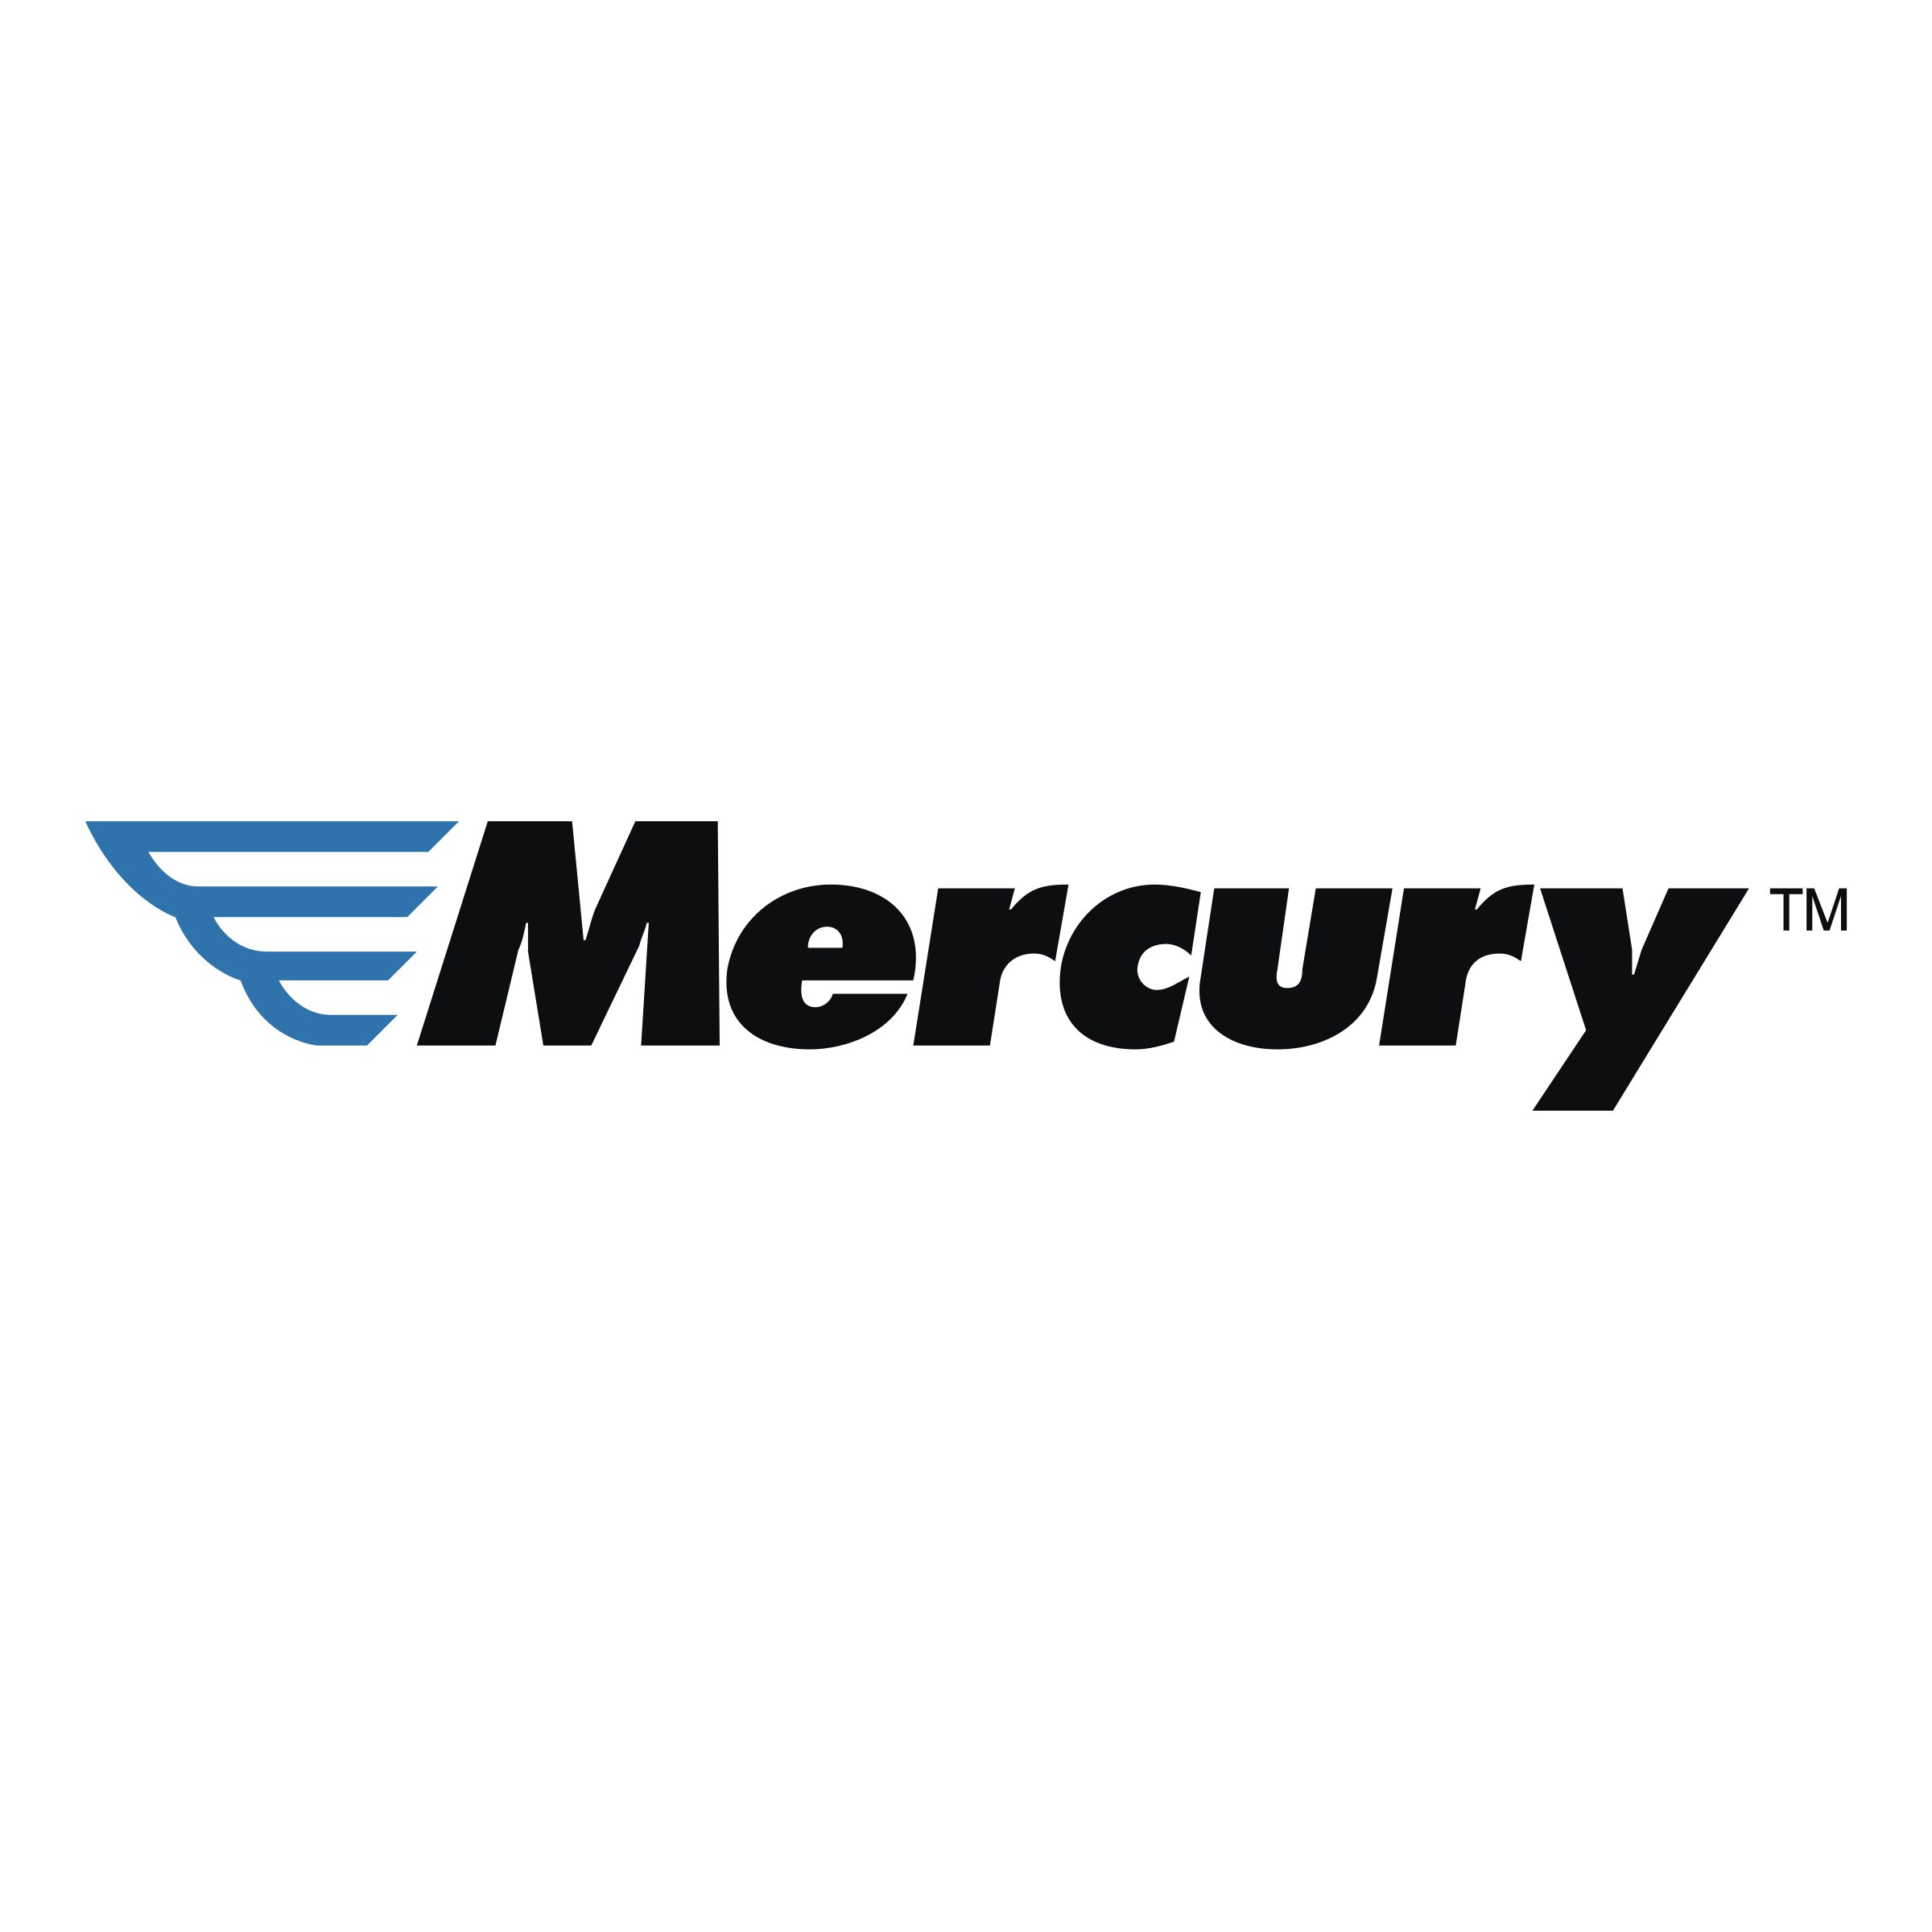 Mercury Logo - Mercury Logo PNG Transparent & SVG Vector - Freebie Supply